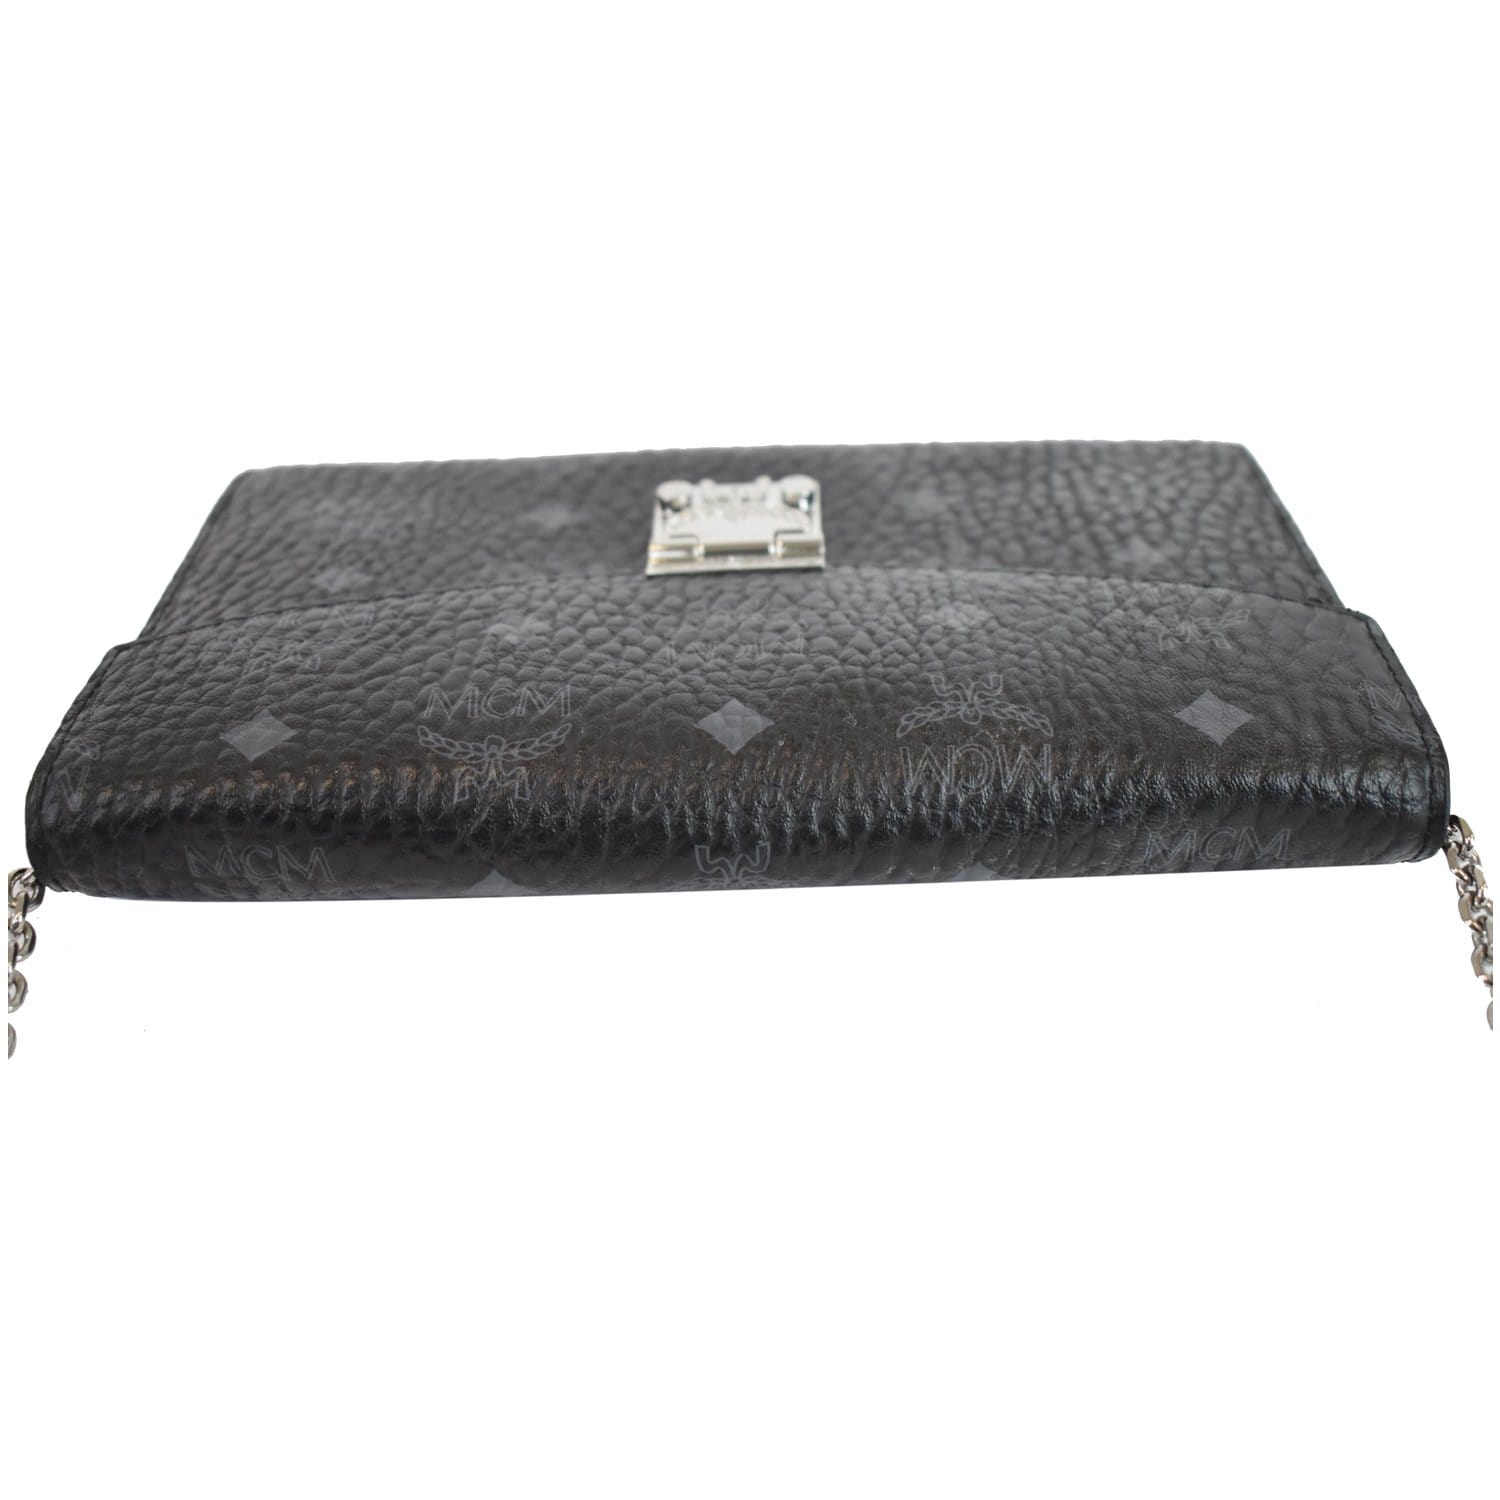 Authentic MCM Millie Visetos Black Pouch Clutch Bag Wallet On The Chain NEW  Rare